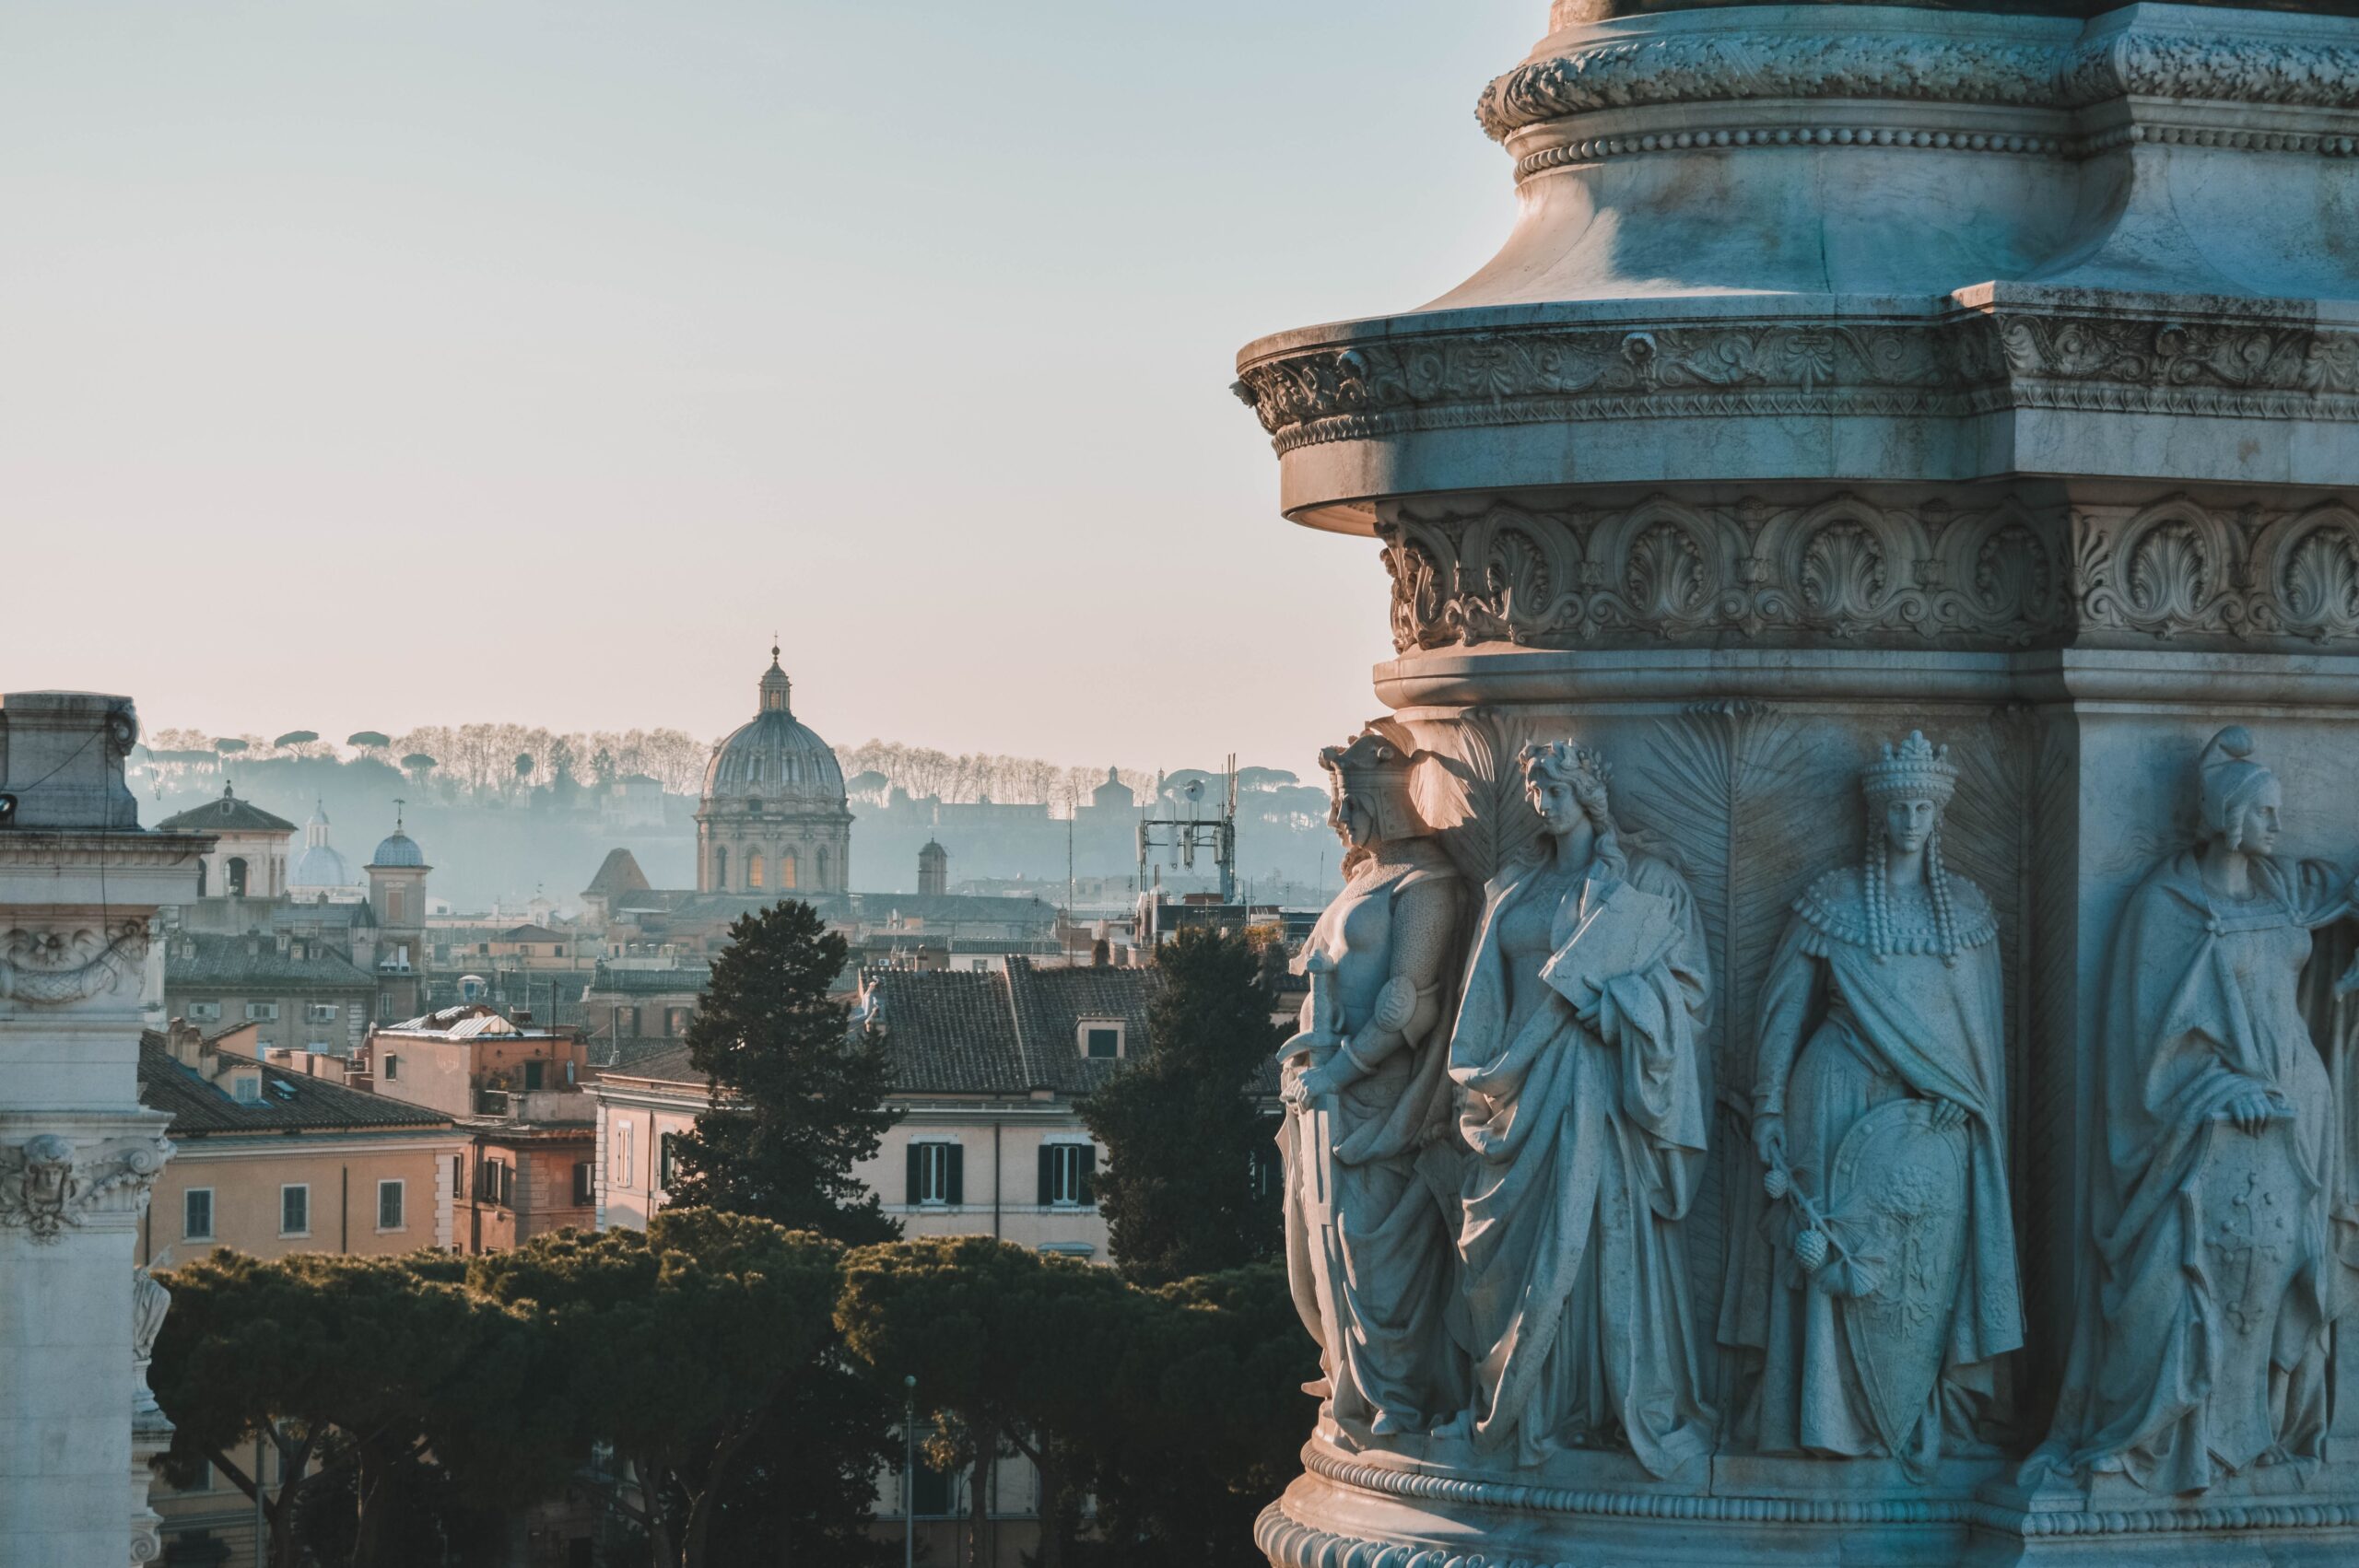 A view across Rome